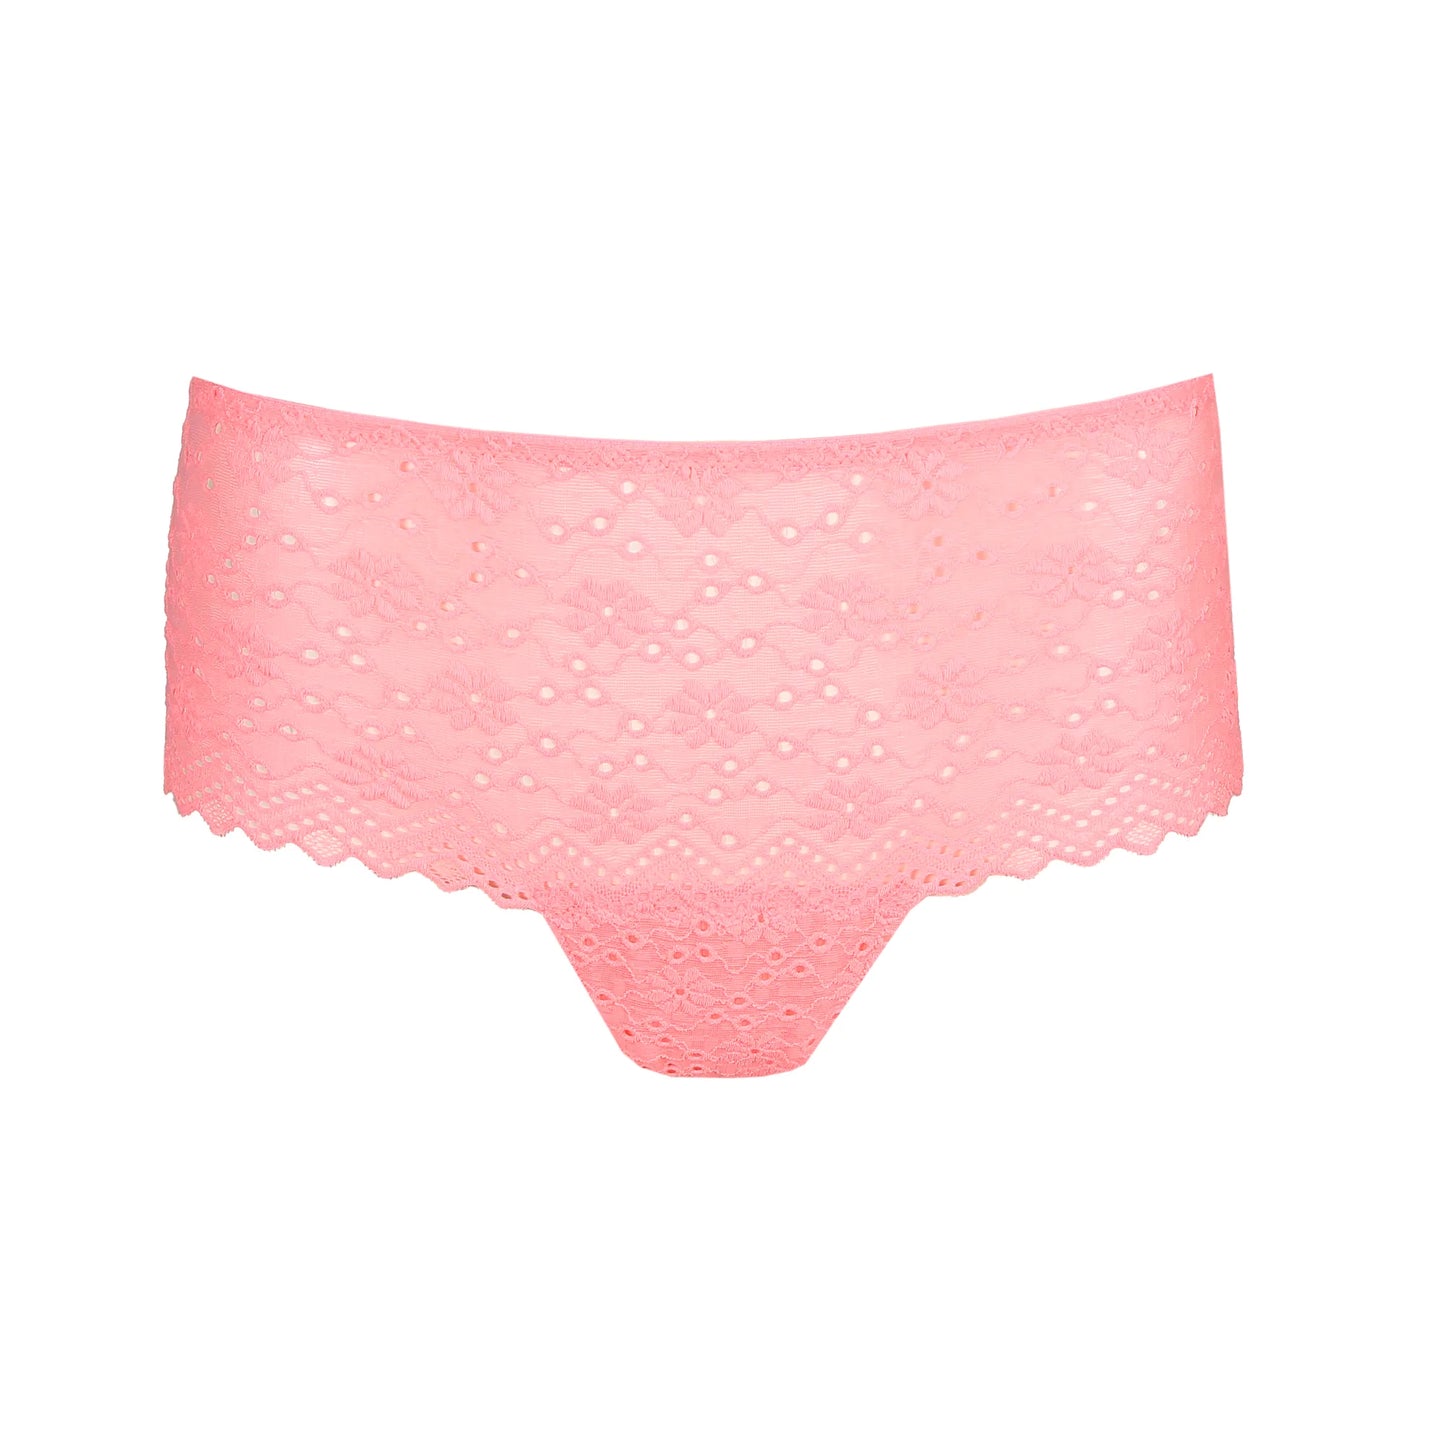 Prima Donna Twist Hotpants - Sunset Hotel 0542232 - Pink Parfait